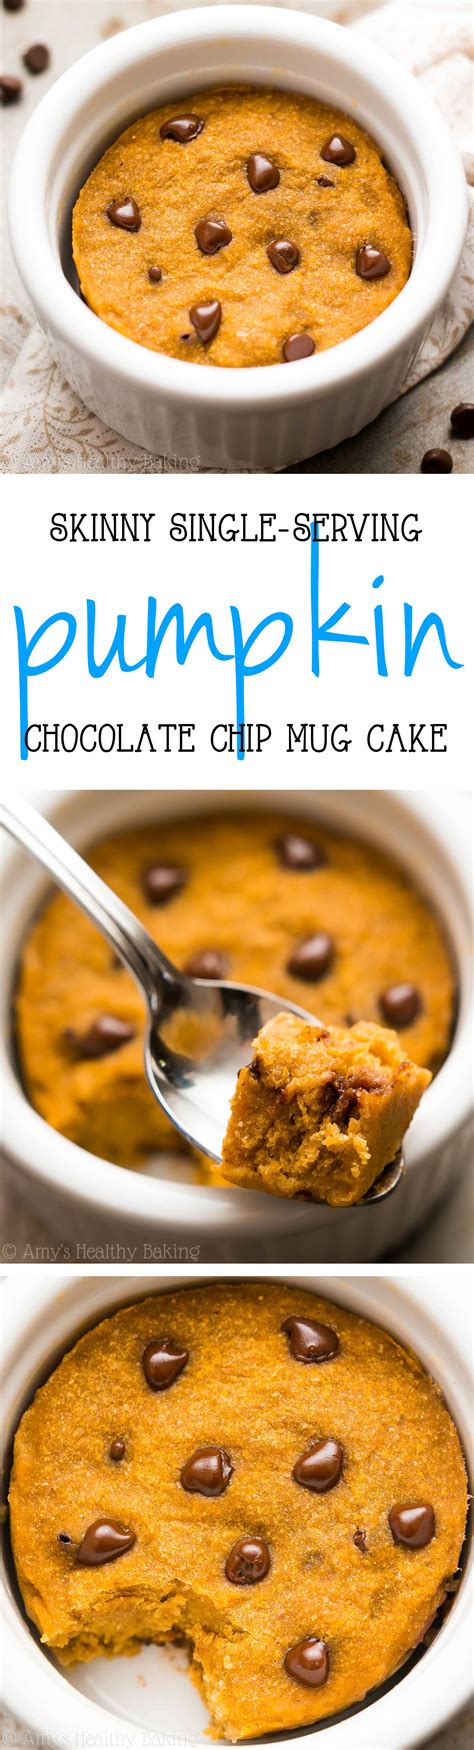 Skinny Single Serving Pumpkin Chocolate Chip Mug Cake Amys Healthy Baking